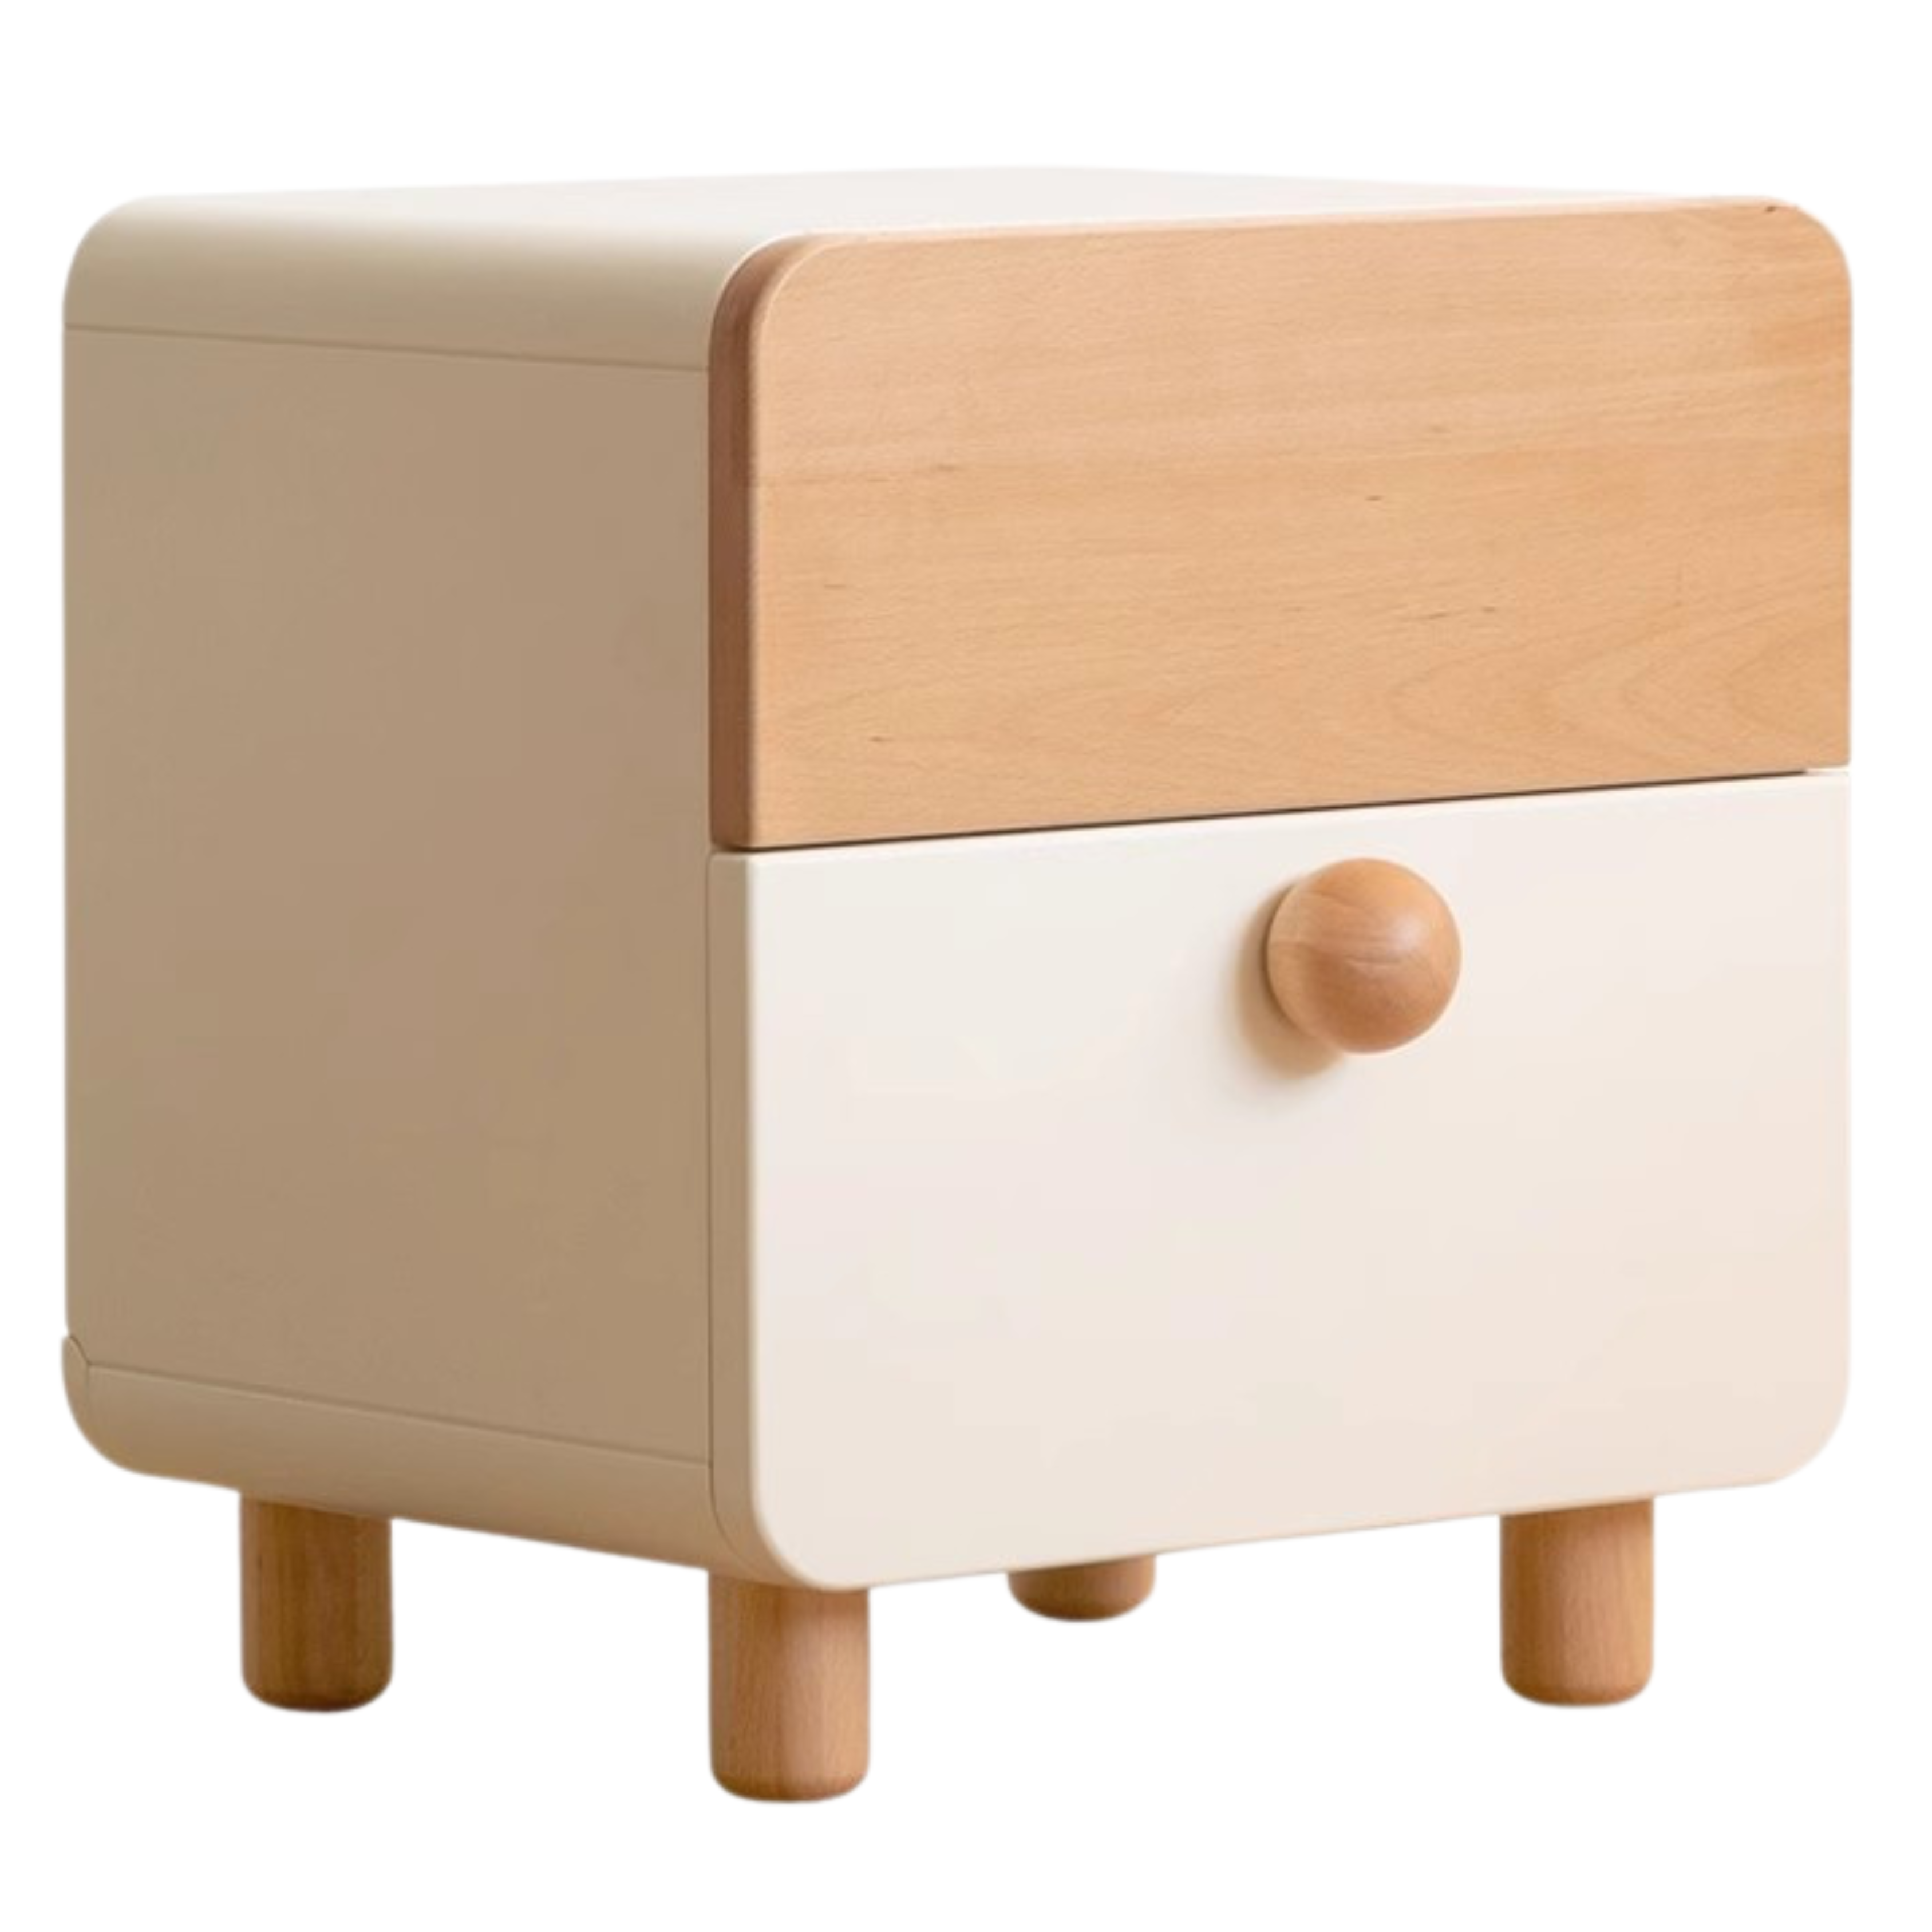 Poplar solid wood Corgi Butt nightstand)